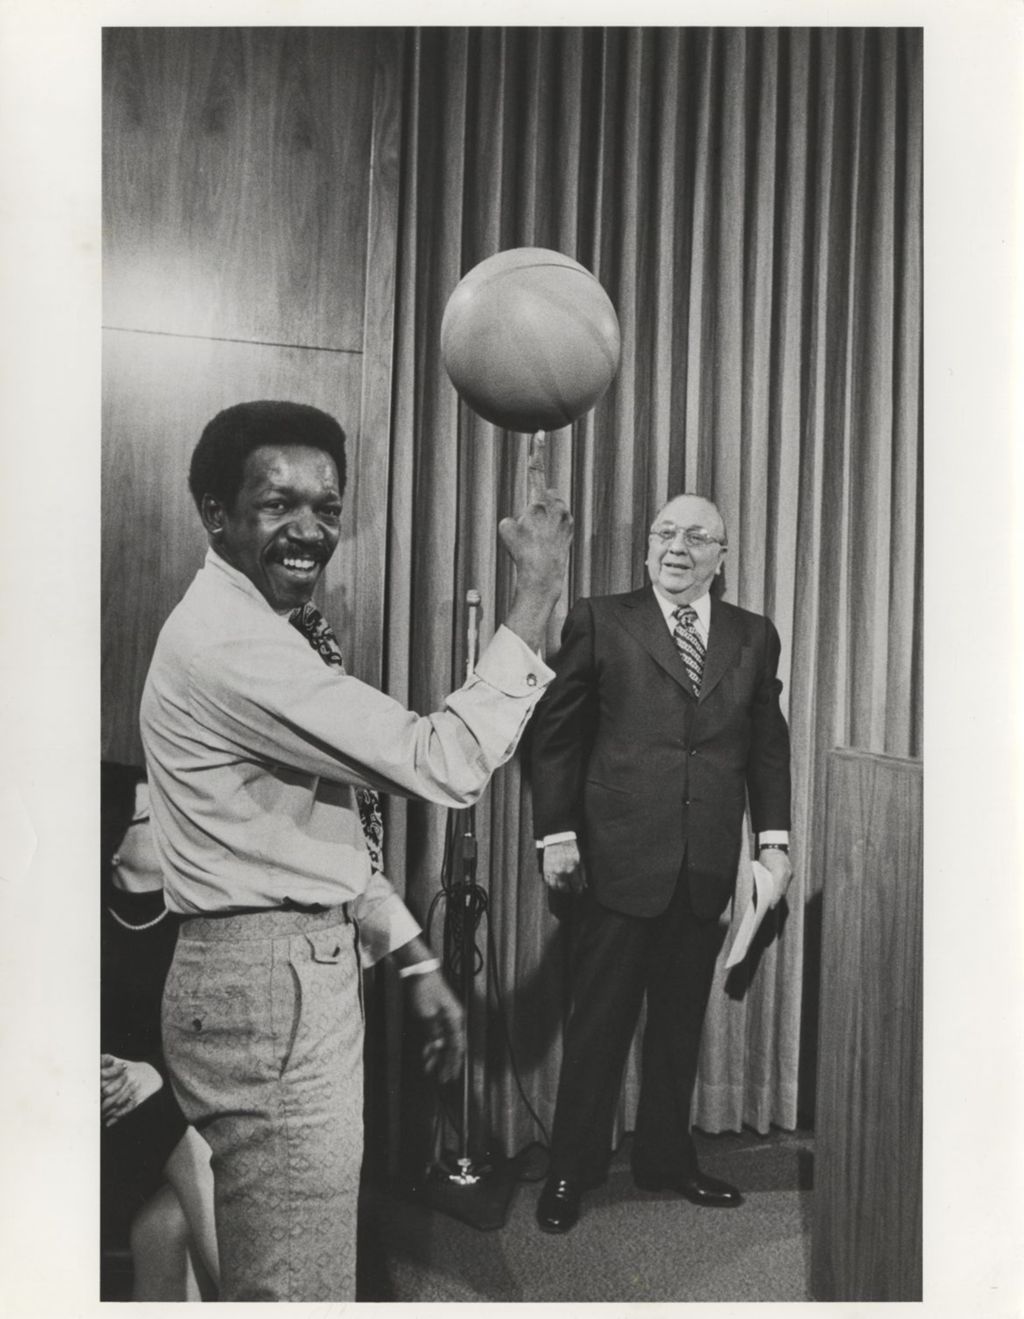 Richard J. Daley with man spinning basketball at City Hall